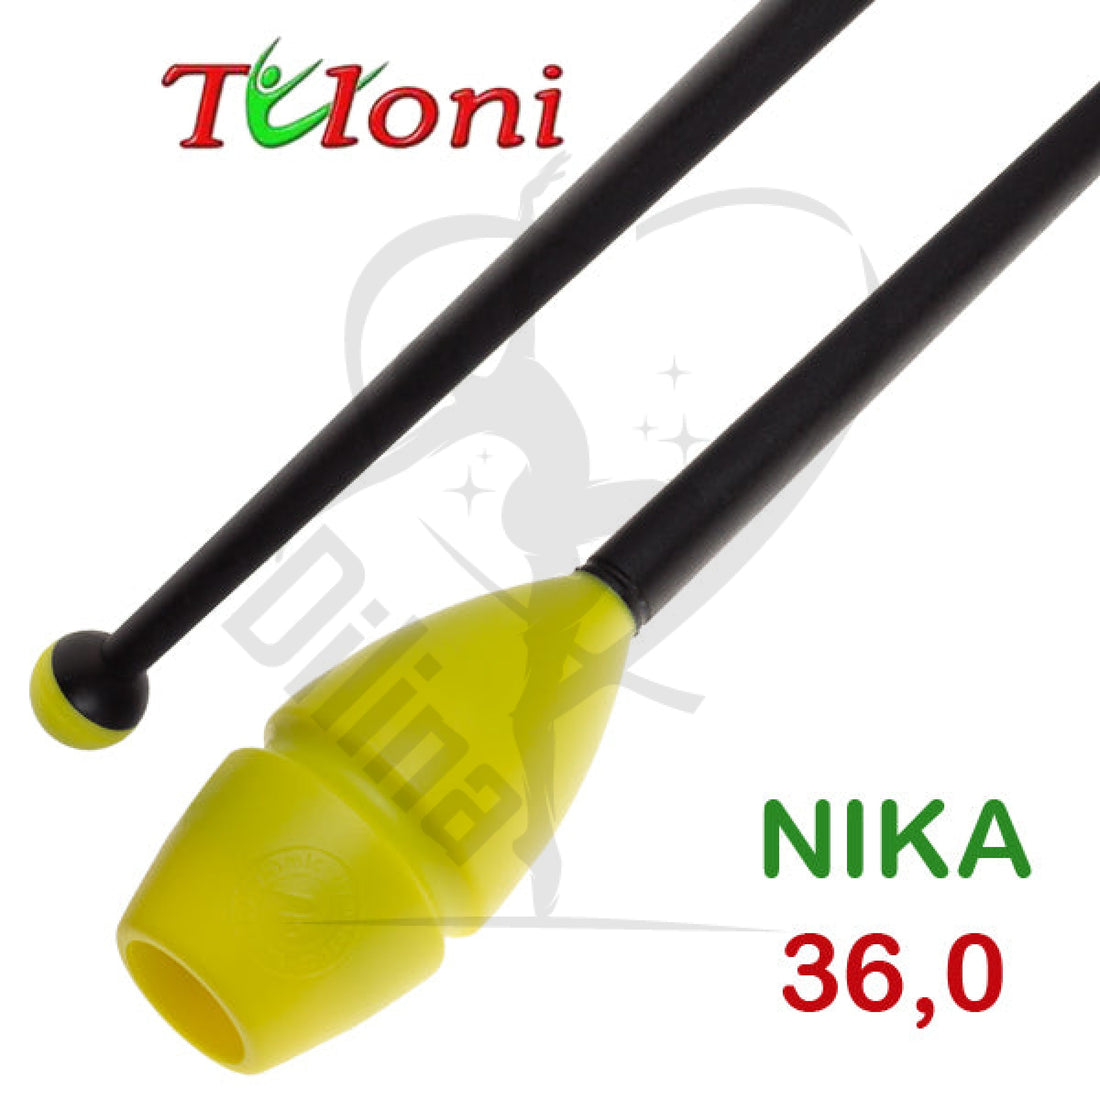 Tuloni Bi-Colour Connectable Clubs Mos. Nika 36Cm Yellow X Black